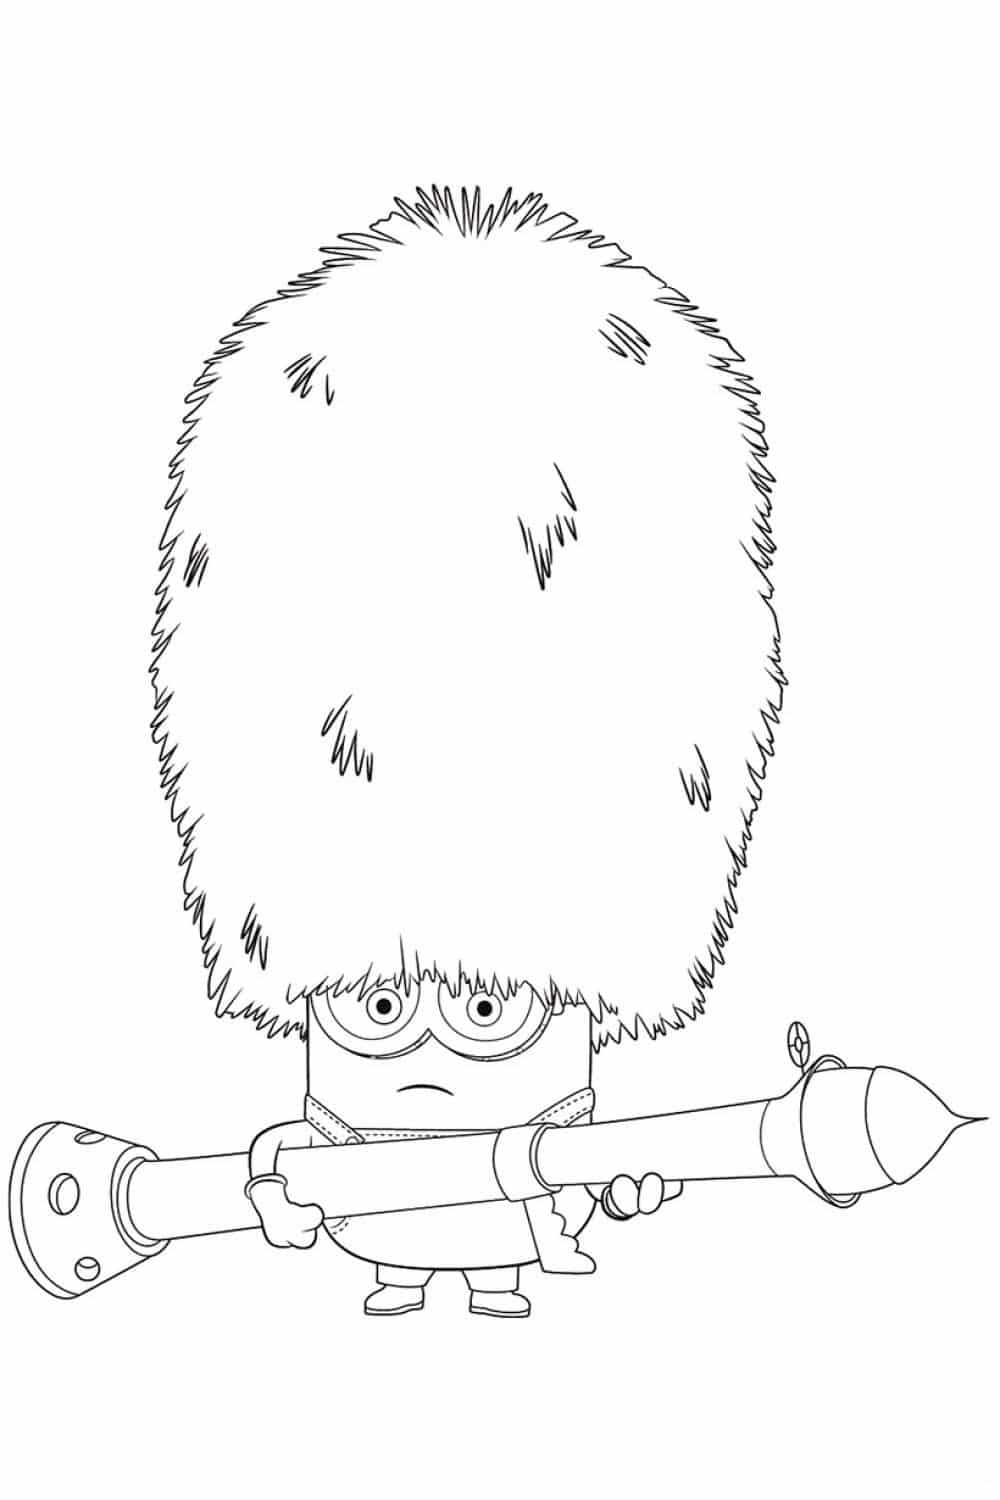 Minion with a big fluffy hat